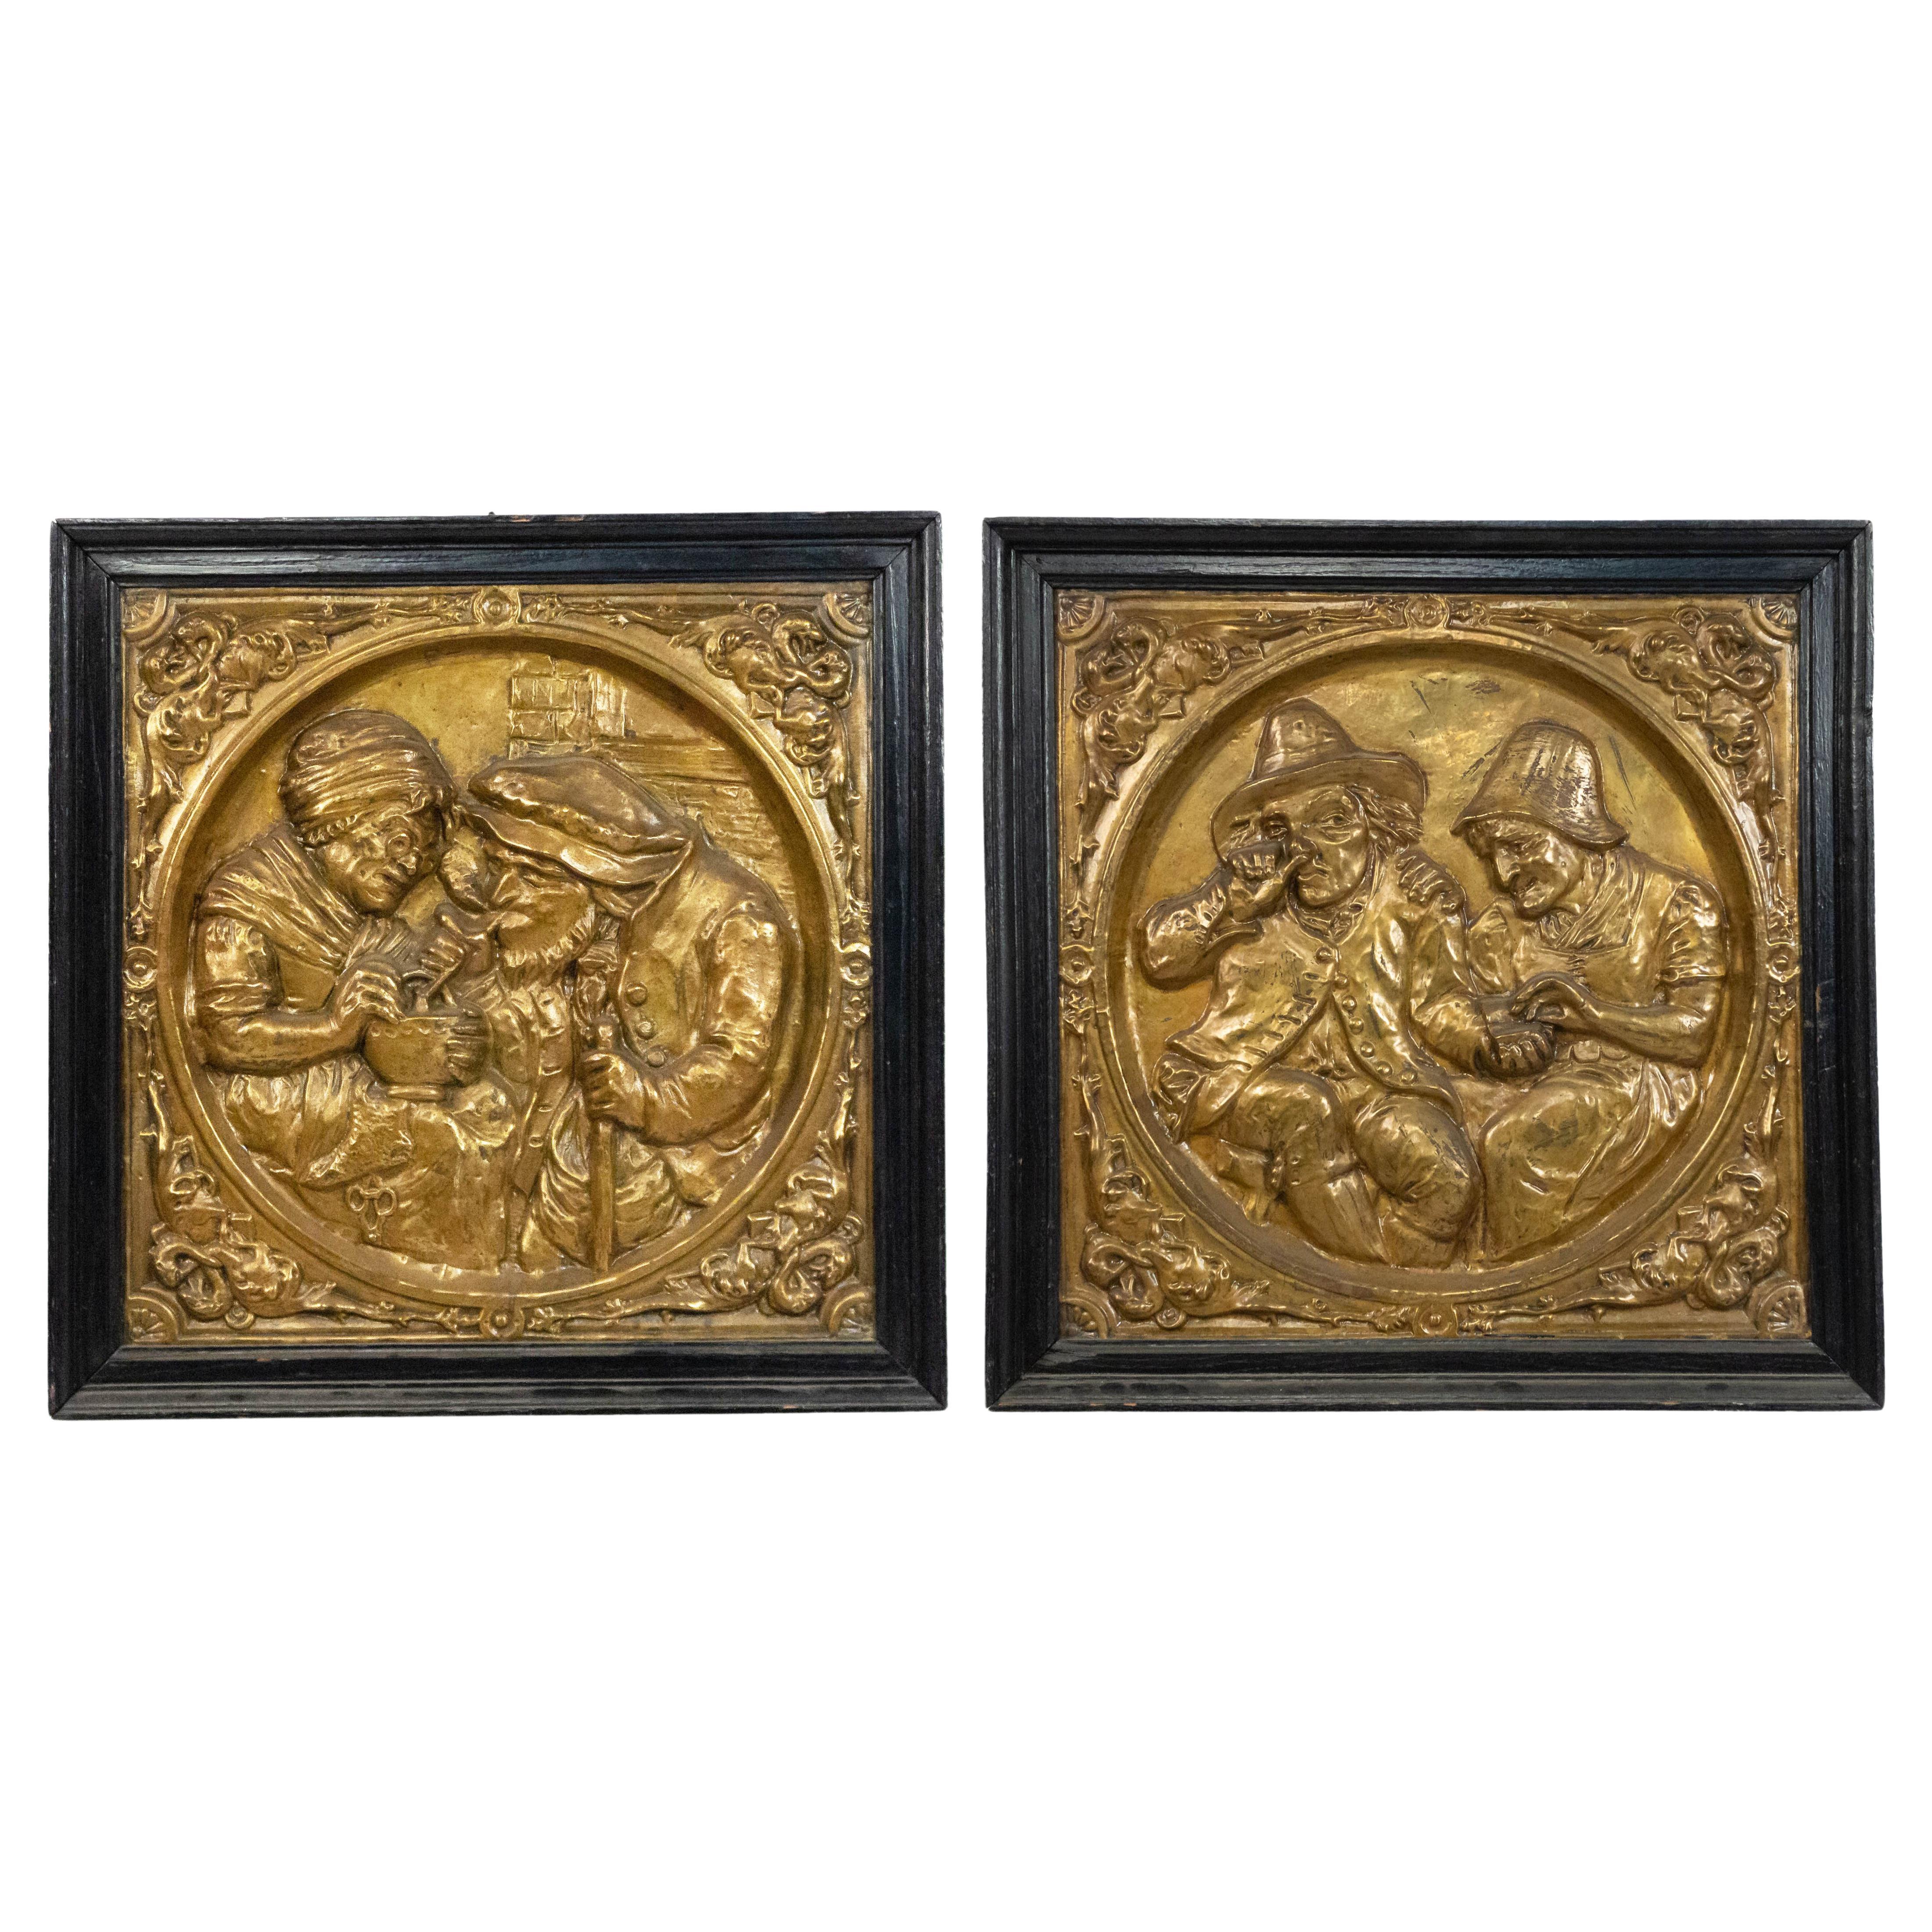 Solid Polished Brass "Art Nouveau" Style Blank Engravable Plaque